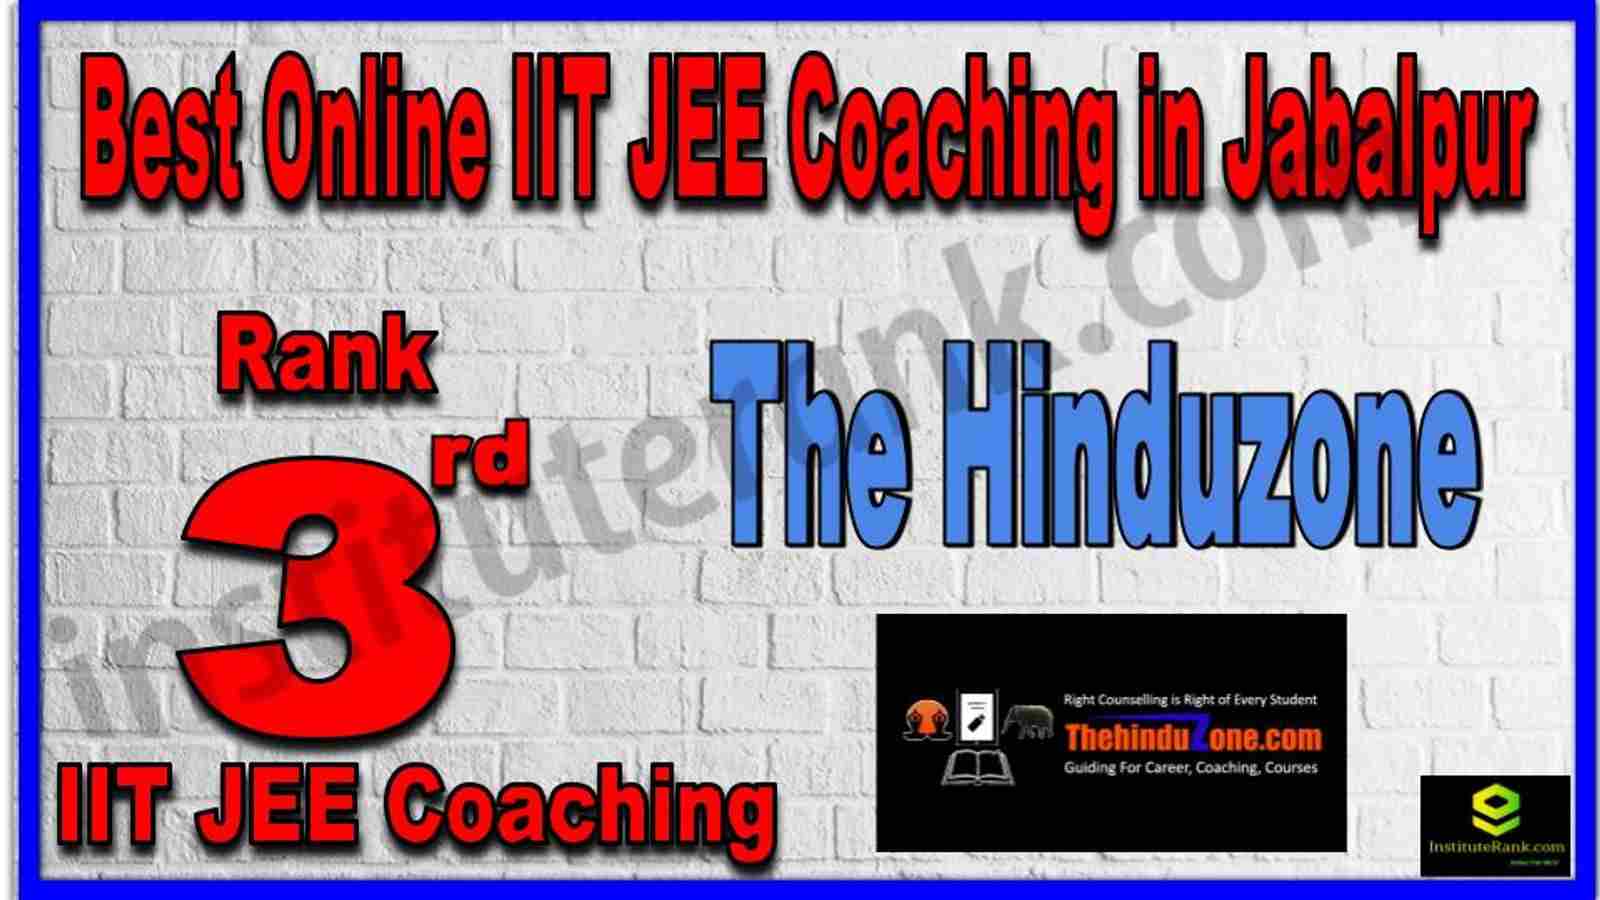 Rank 3rd Best Online IIT JEE Coaching in Jabalpur